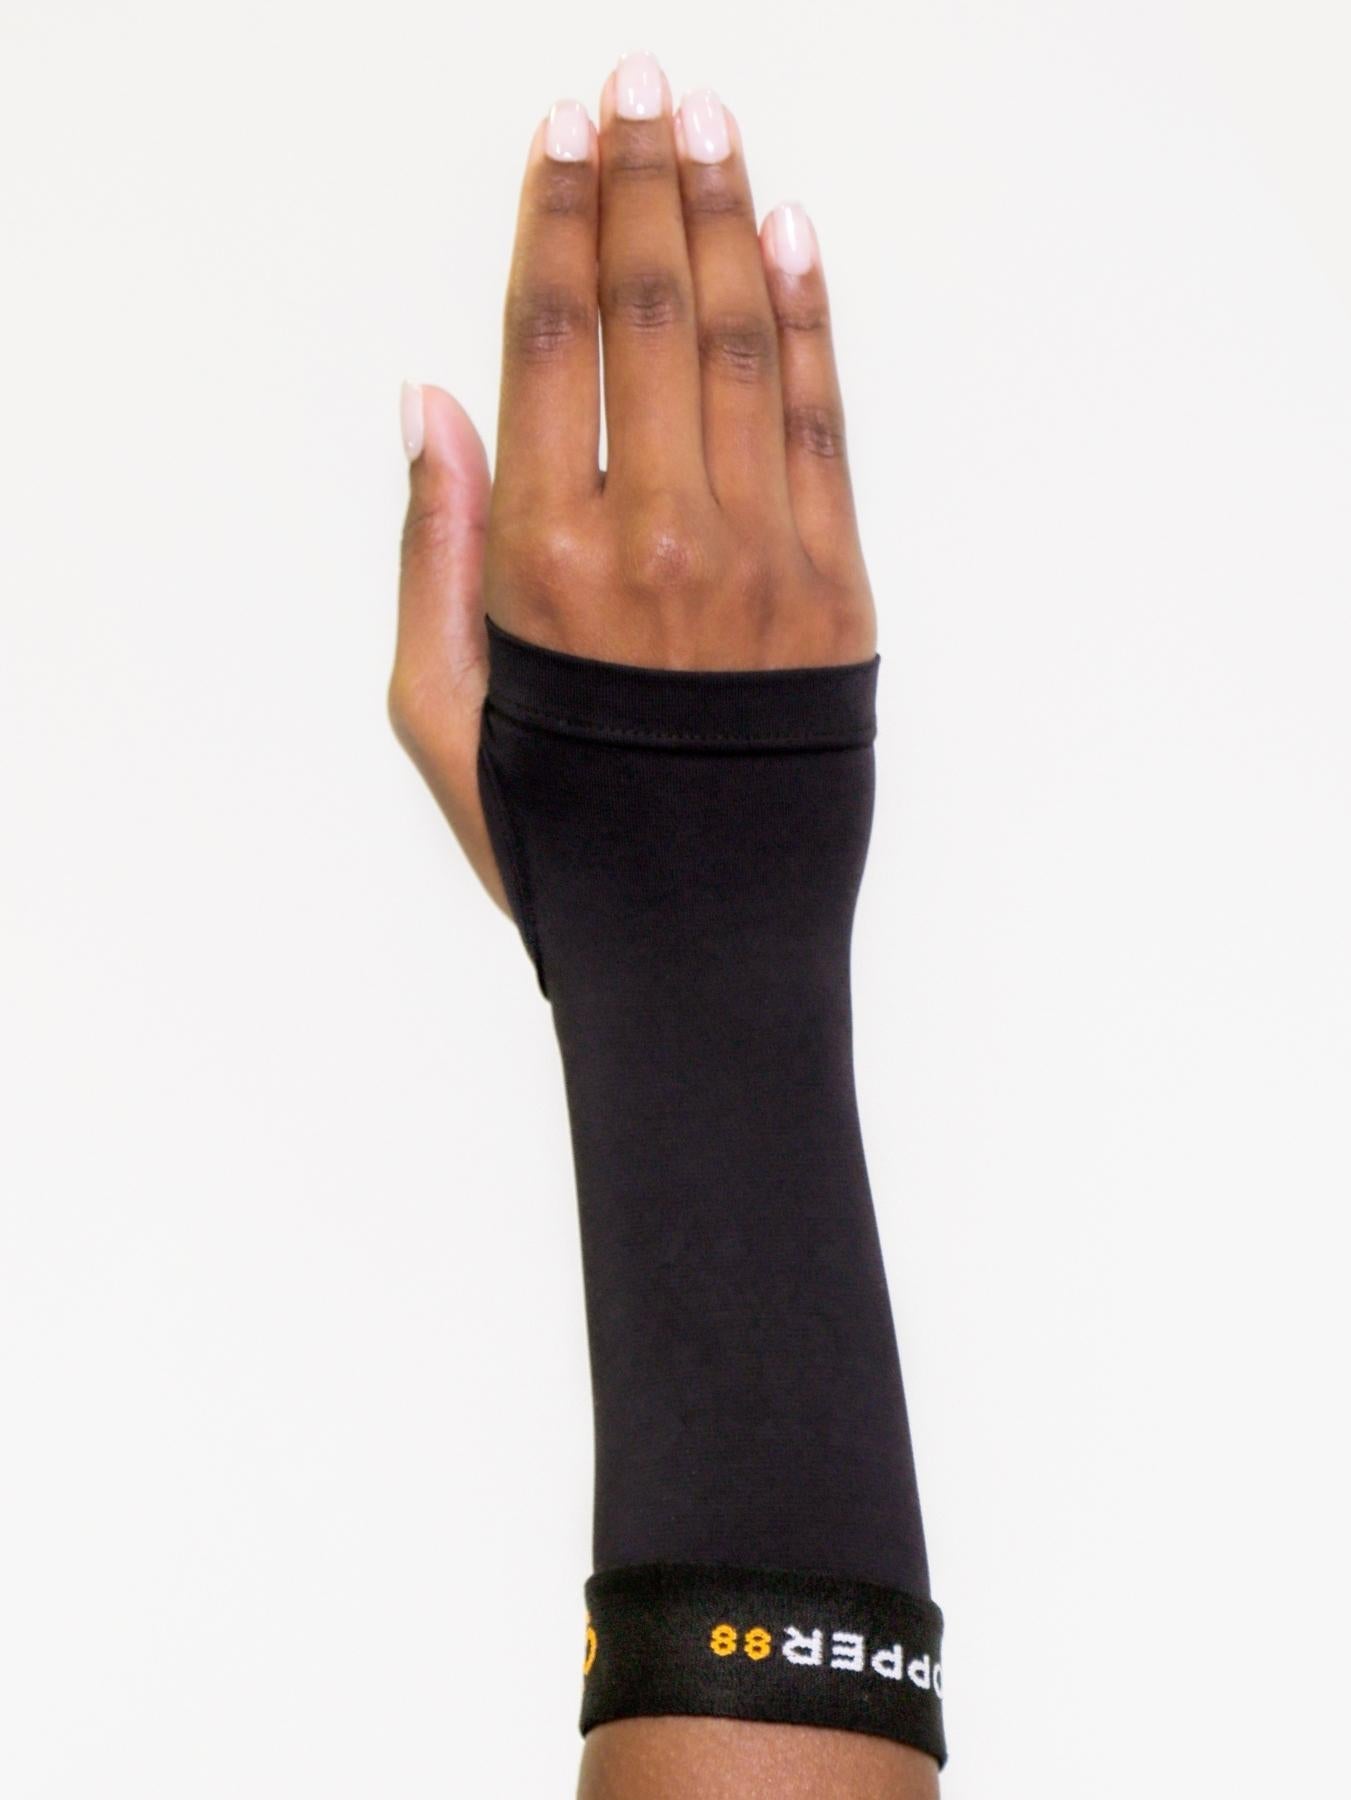 Copper Compression Wrist / Hand Sleeve